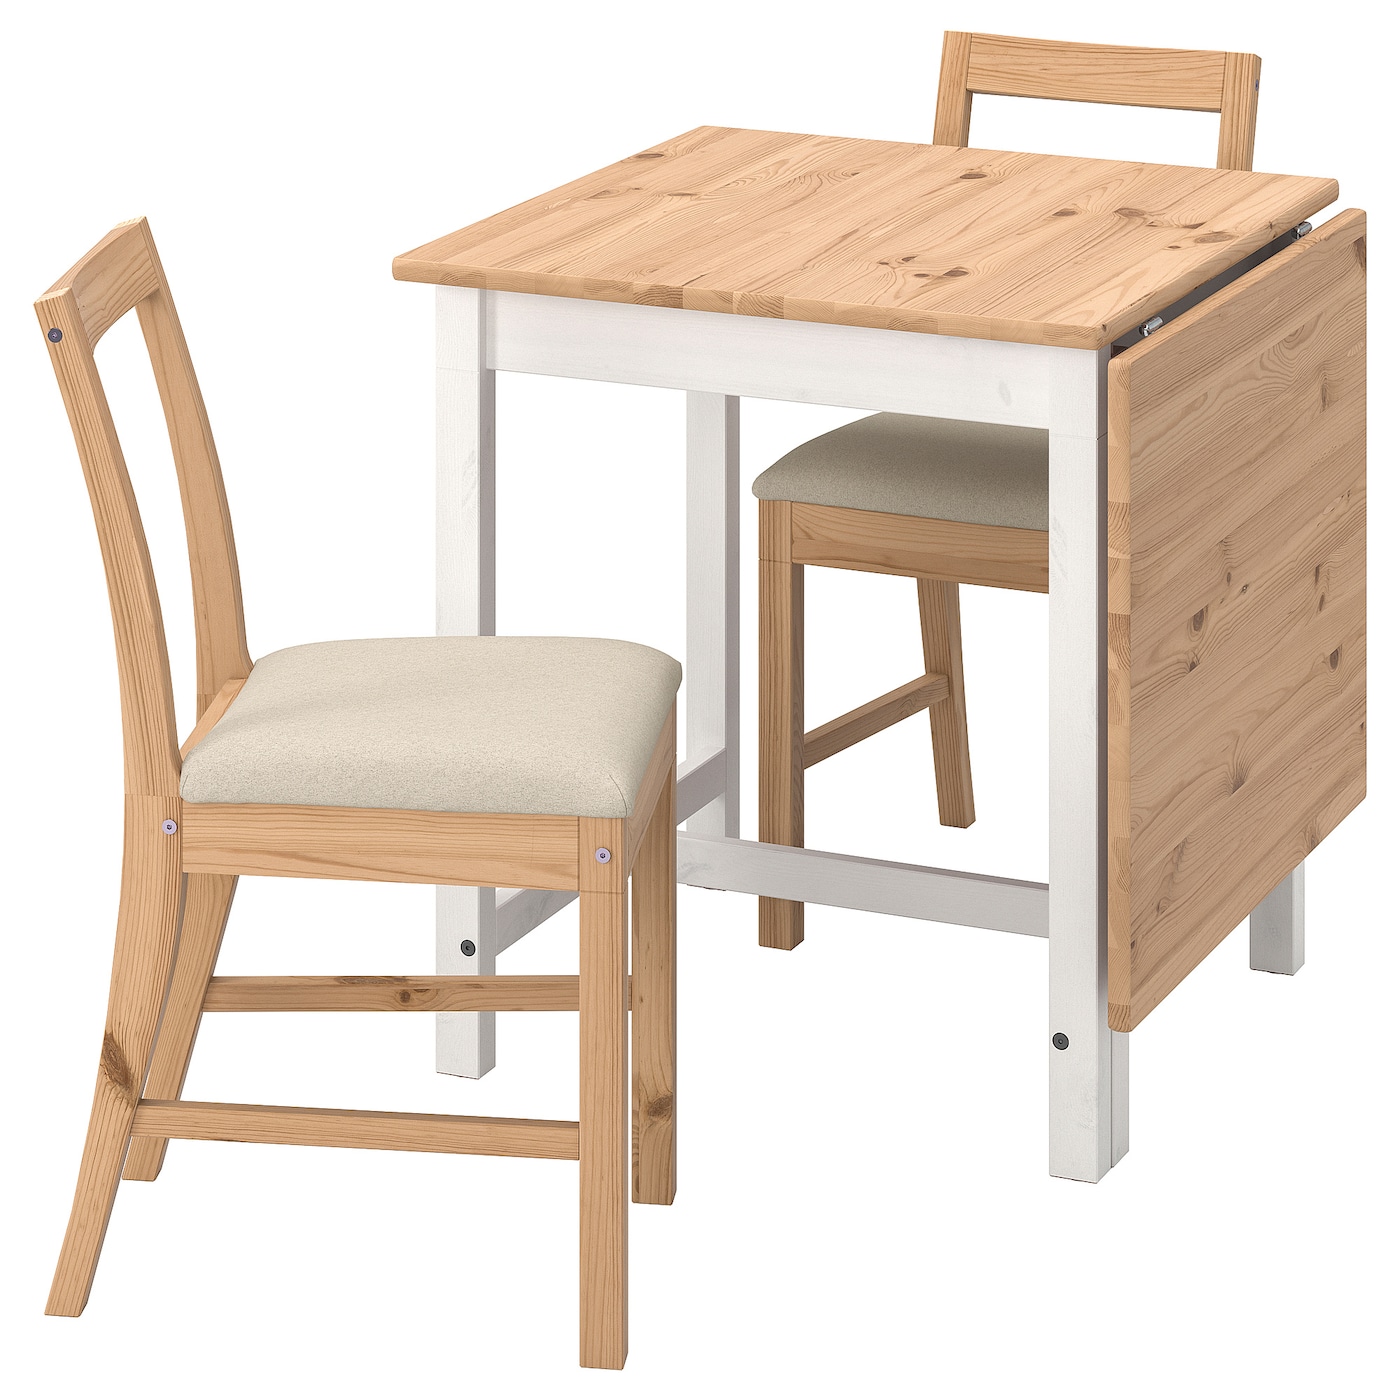 Набор кухонных столов - PINNTORP IKEA/ ПИННТОРП ИКЕА, 124х67 см, бежевый